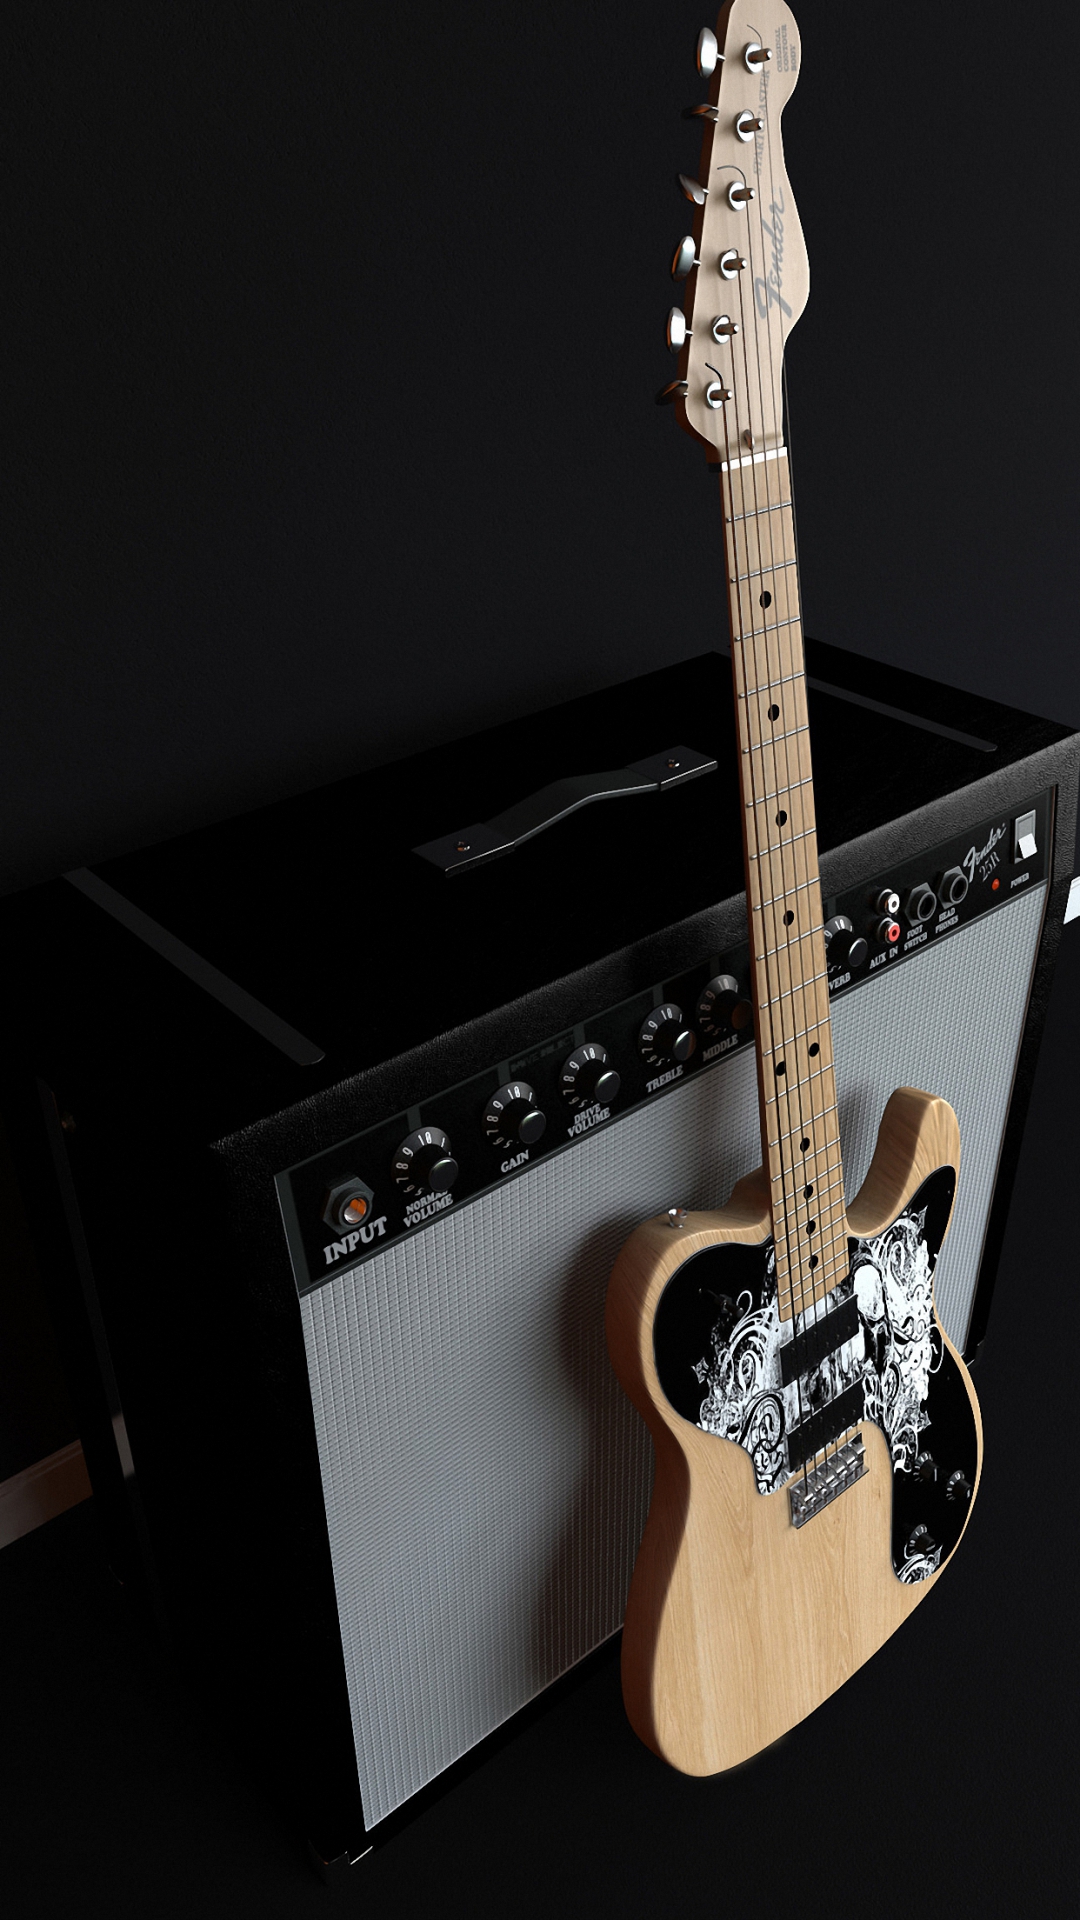 Fender Music Guitar Iphone 6 Wallpapers Hd - Fender Guitar Wallpaper Hd - HD Wallpaper 